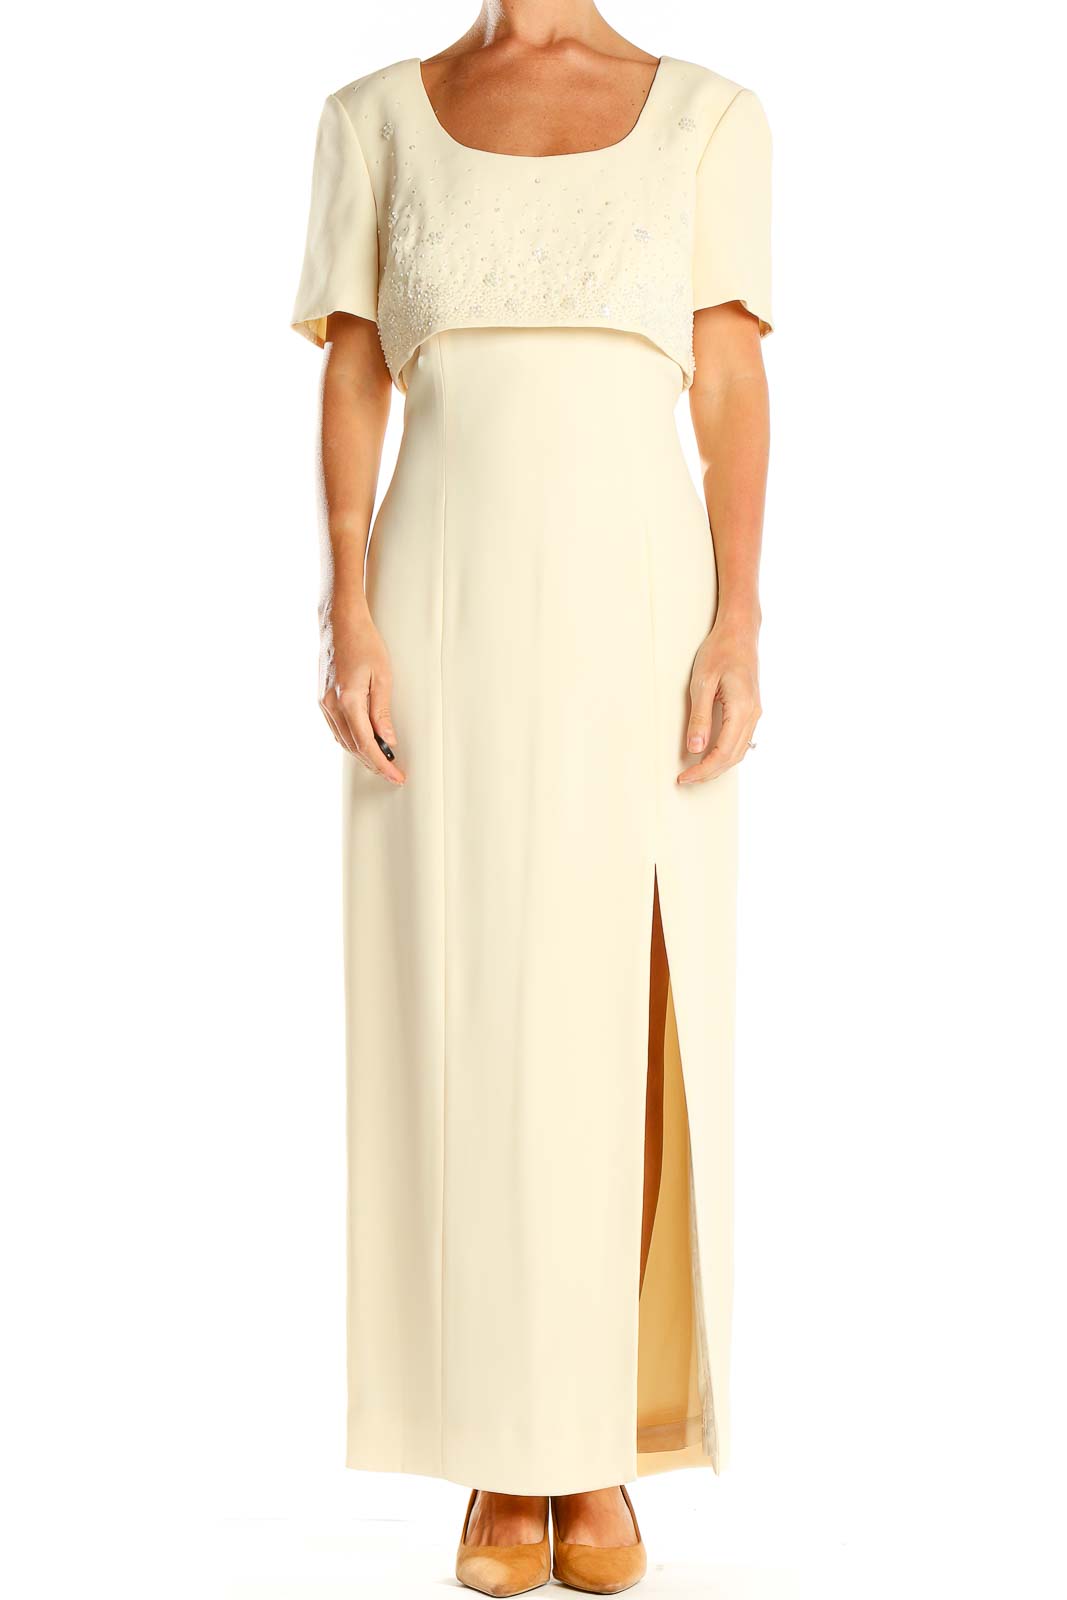 Beige Vintage Layered Sequin Column Dress Front